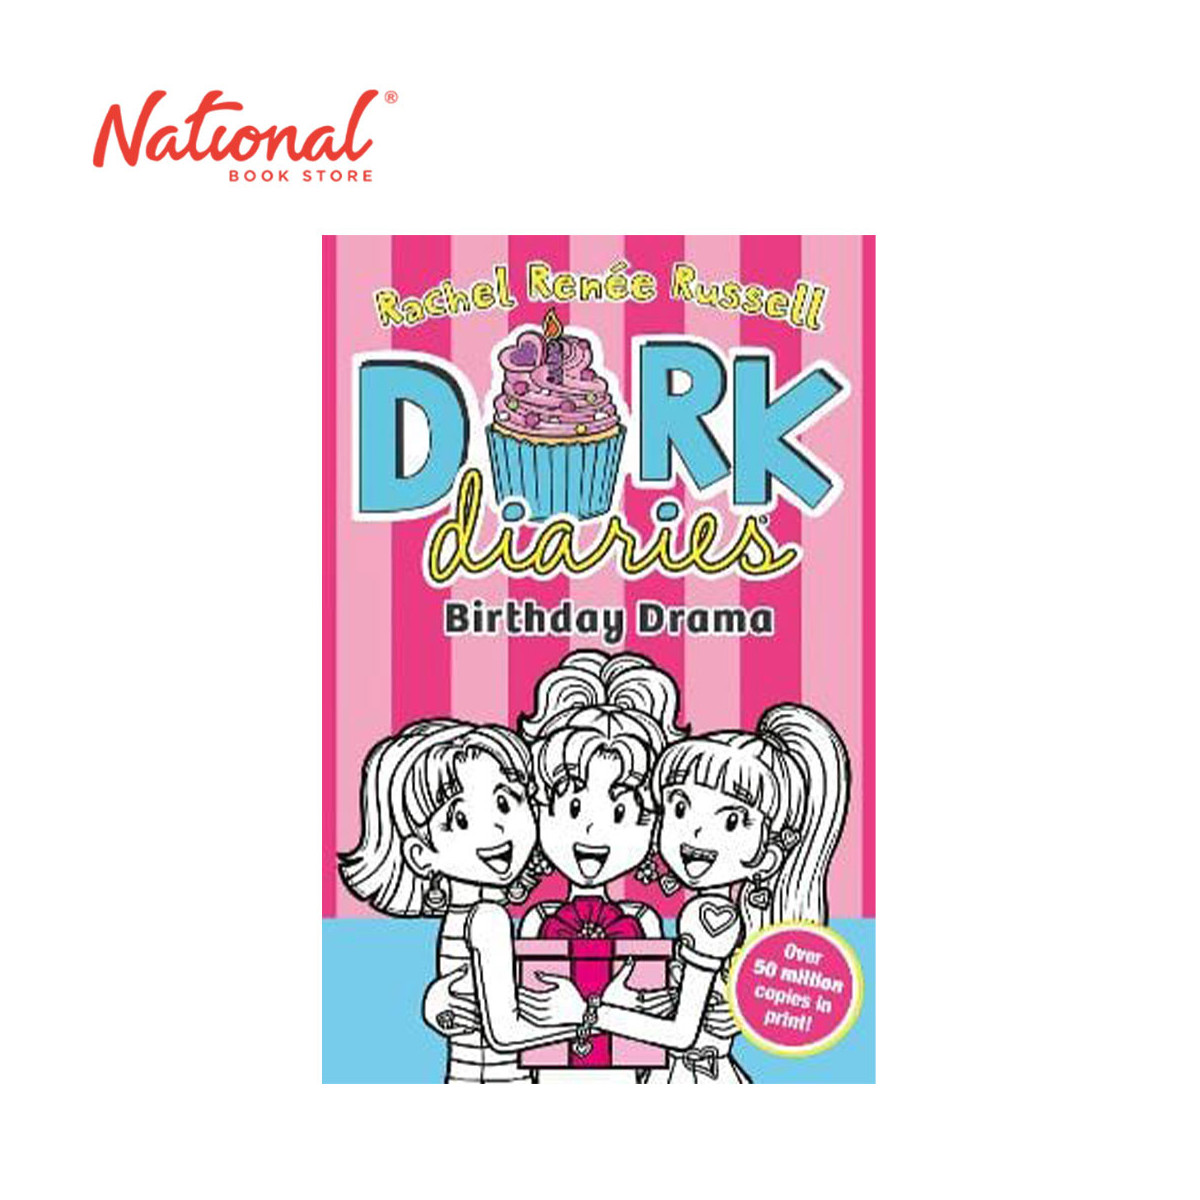 Dork Diaries 13: Birthday Drama UK New Cover - Trade Paperback - Children's Books